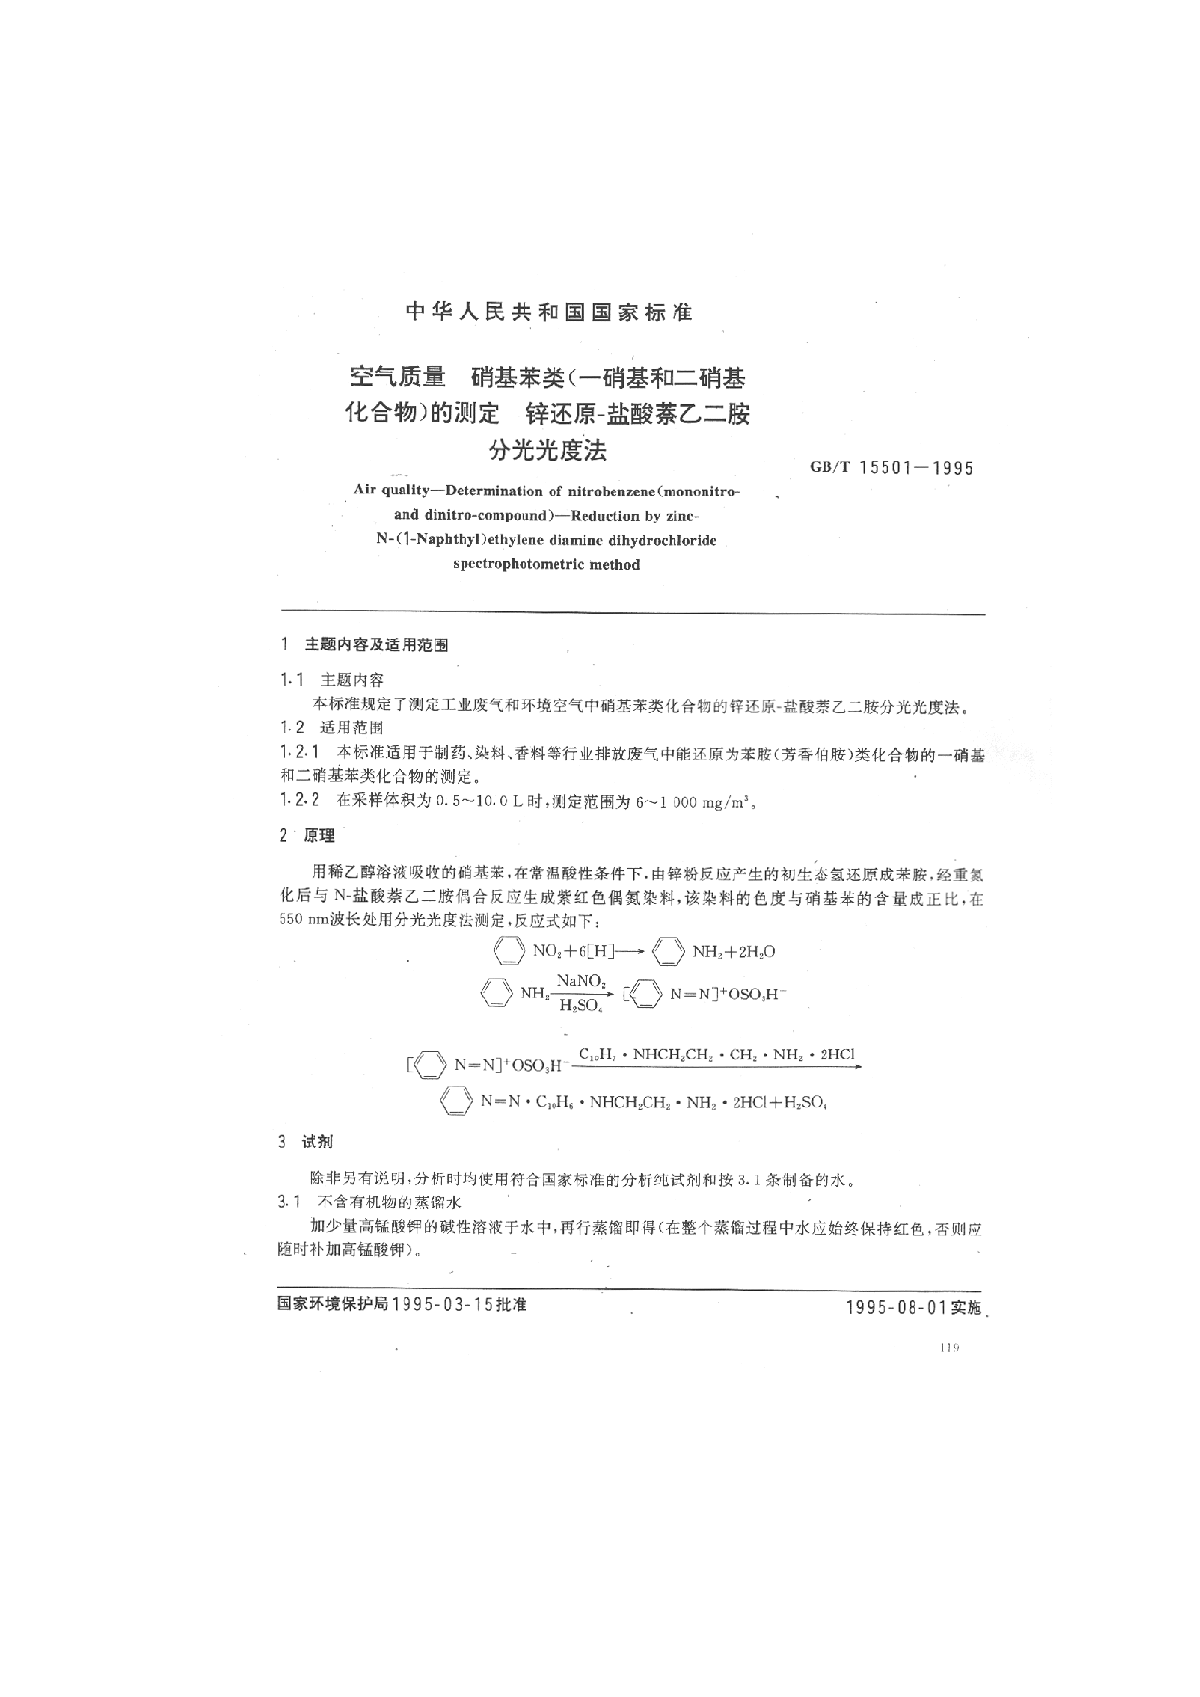 GB_T 15501-1995 空气质量 硝基苯类-图一